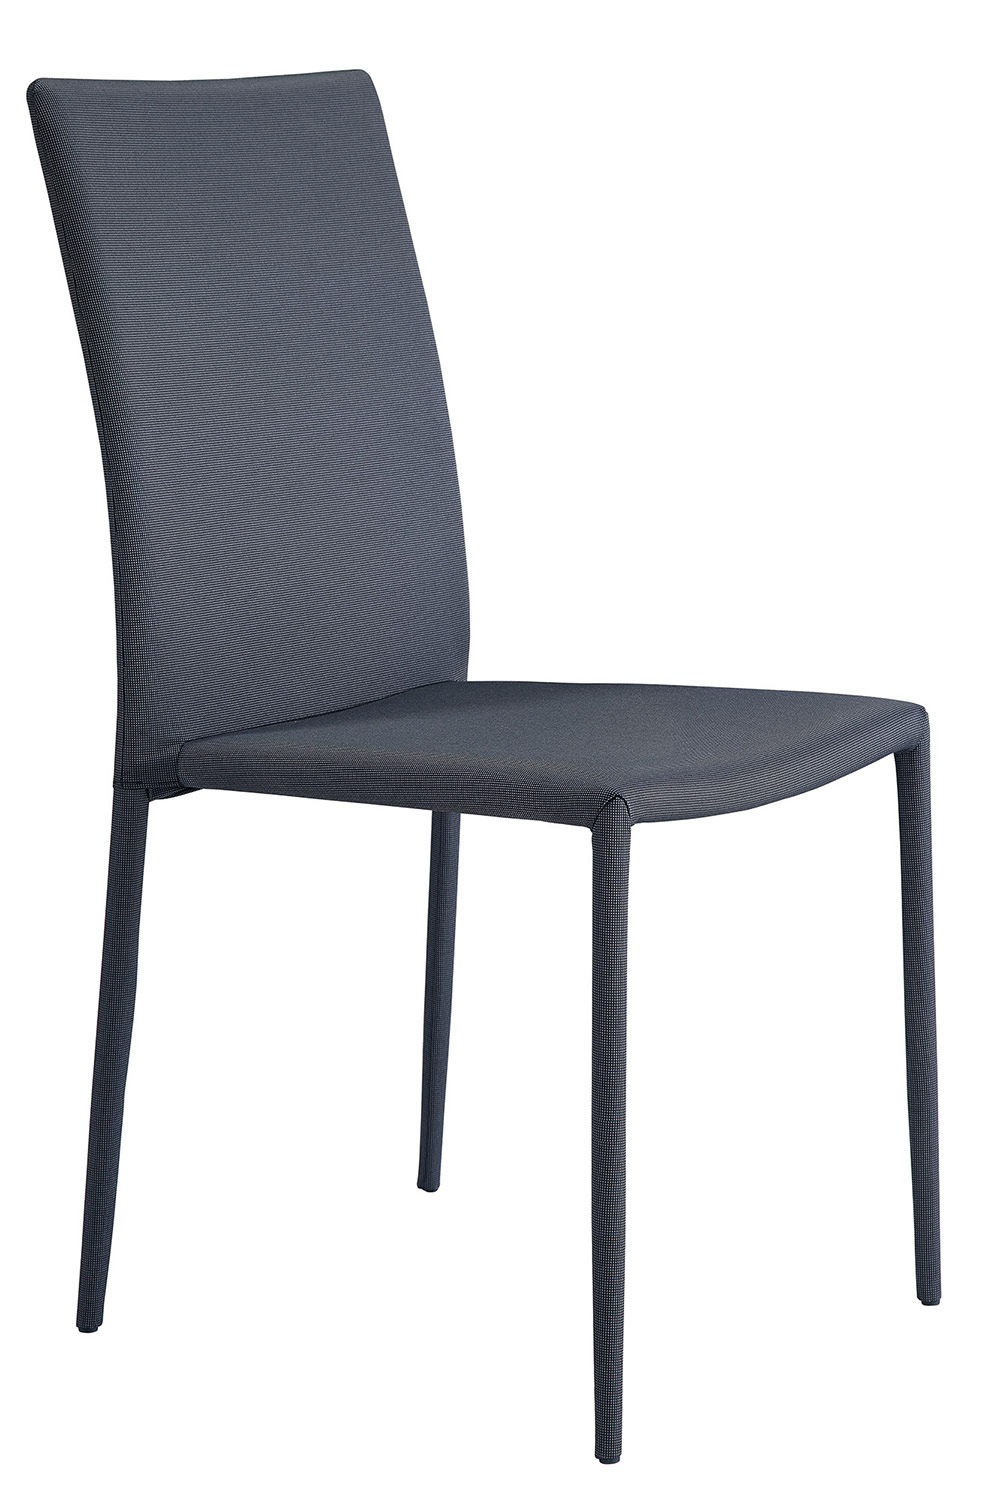 Coaster Adler Side Chair - Grey/Black